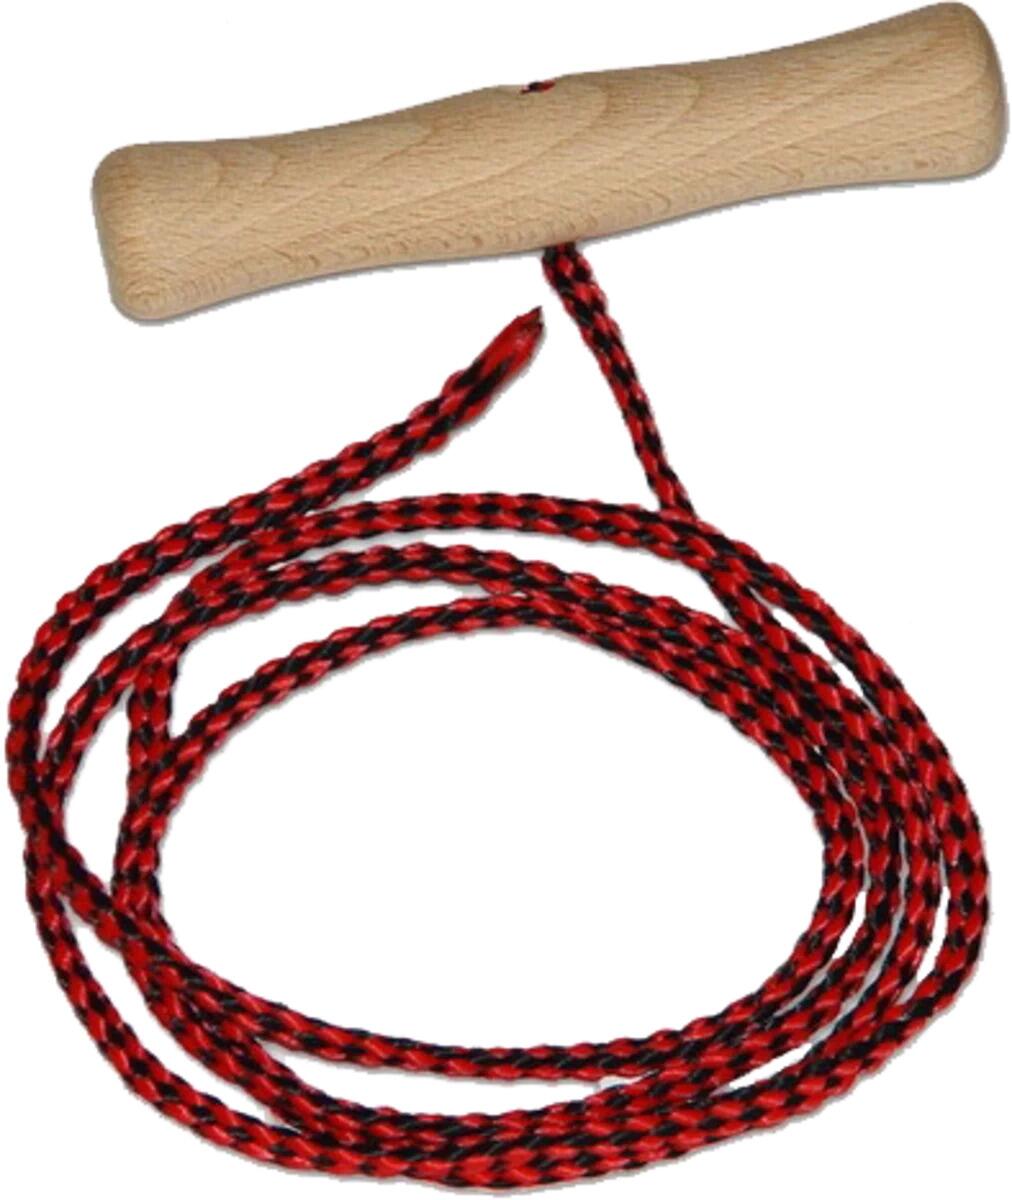 Spolnota Schlittenseil rot mit Holzknauf (rot) von Spólnota